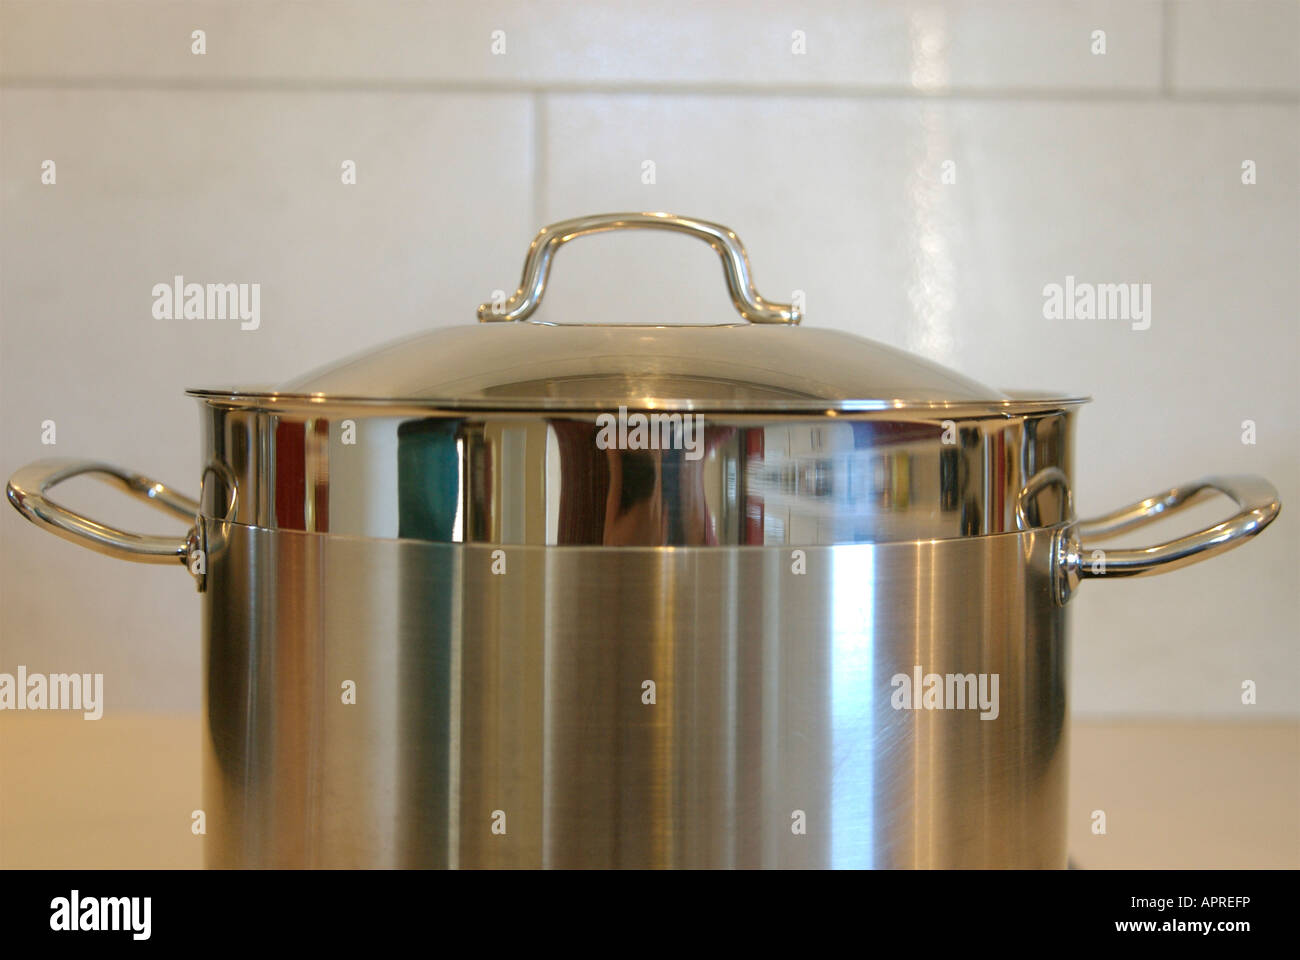 https://c8.alamy.com/comp/APREFP/kitchenware-cookware-silver-steel-modern-cooking-pot-stockpot-casserole-APREFP.jpg